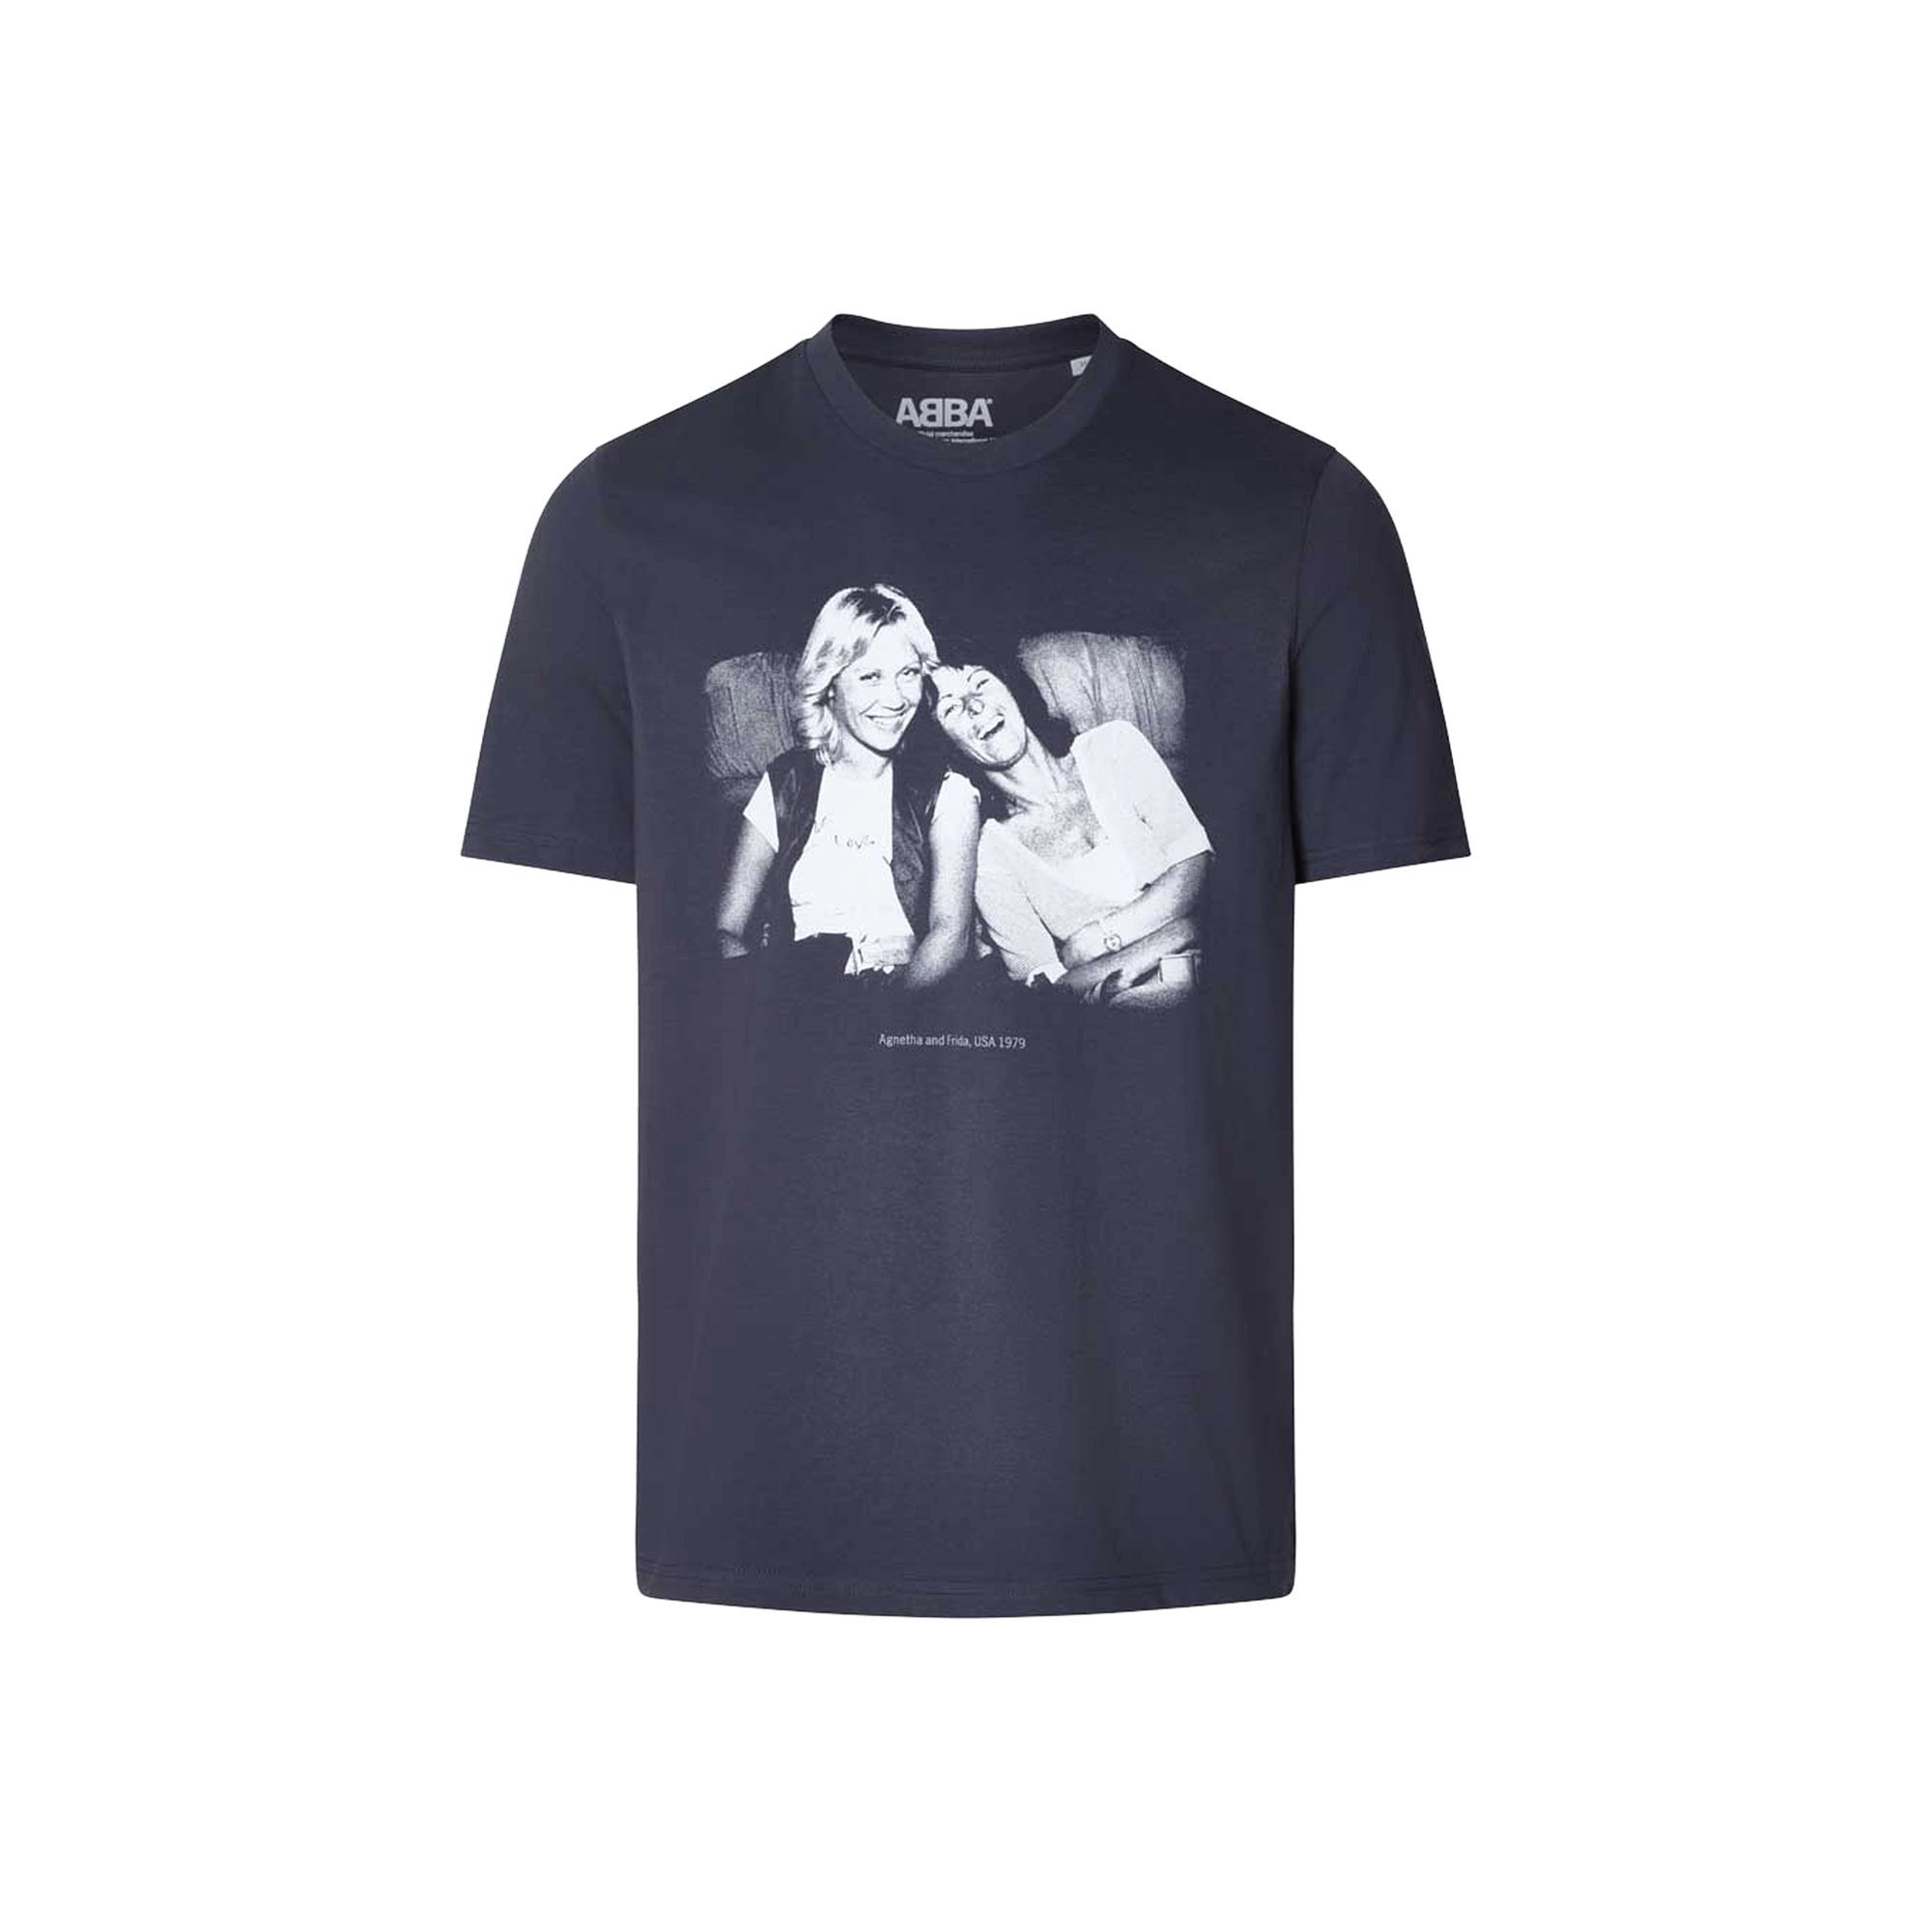 ABBA Agnetha och Frida 1979 t-shirt